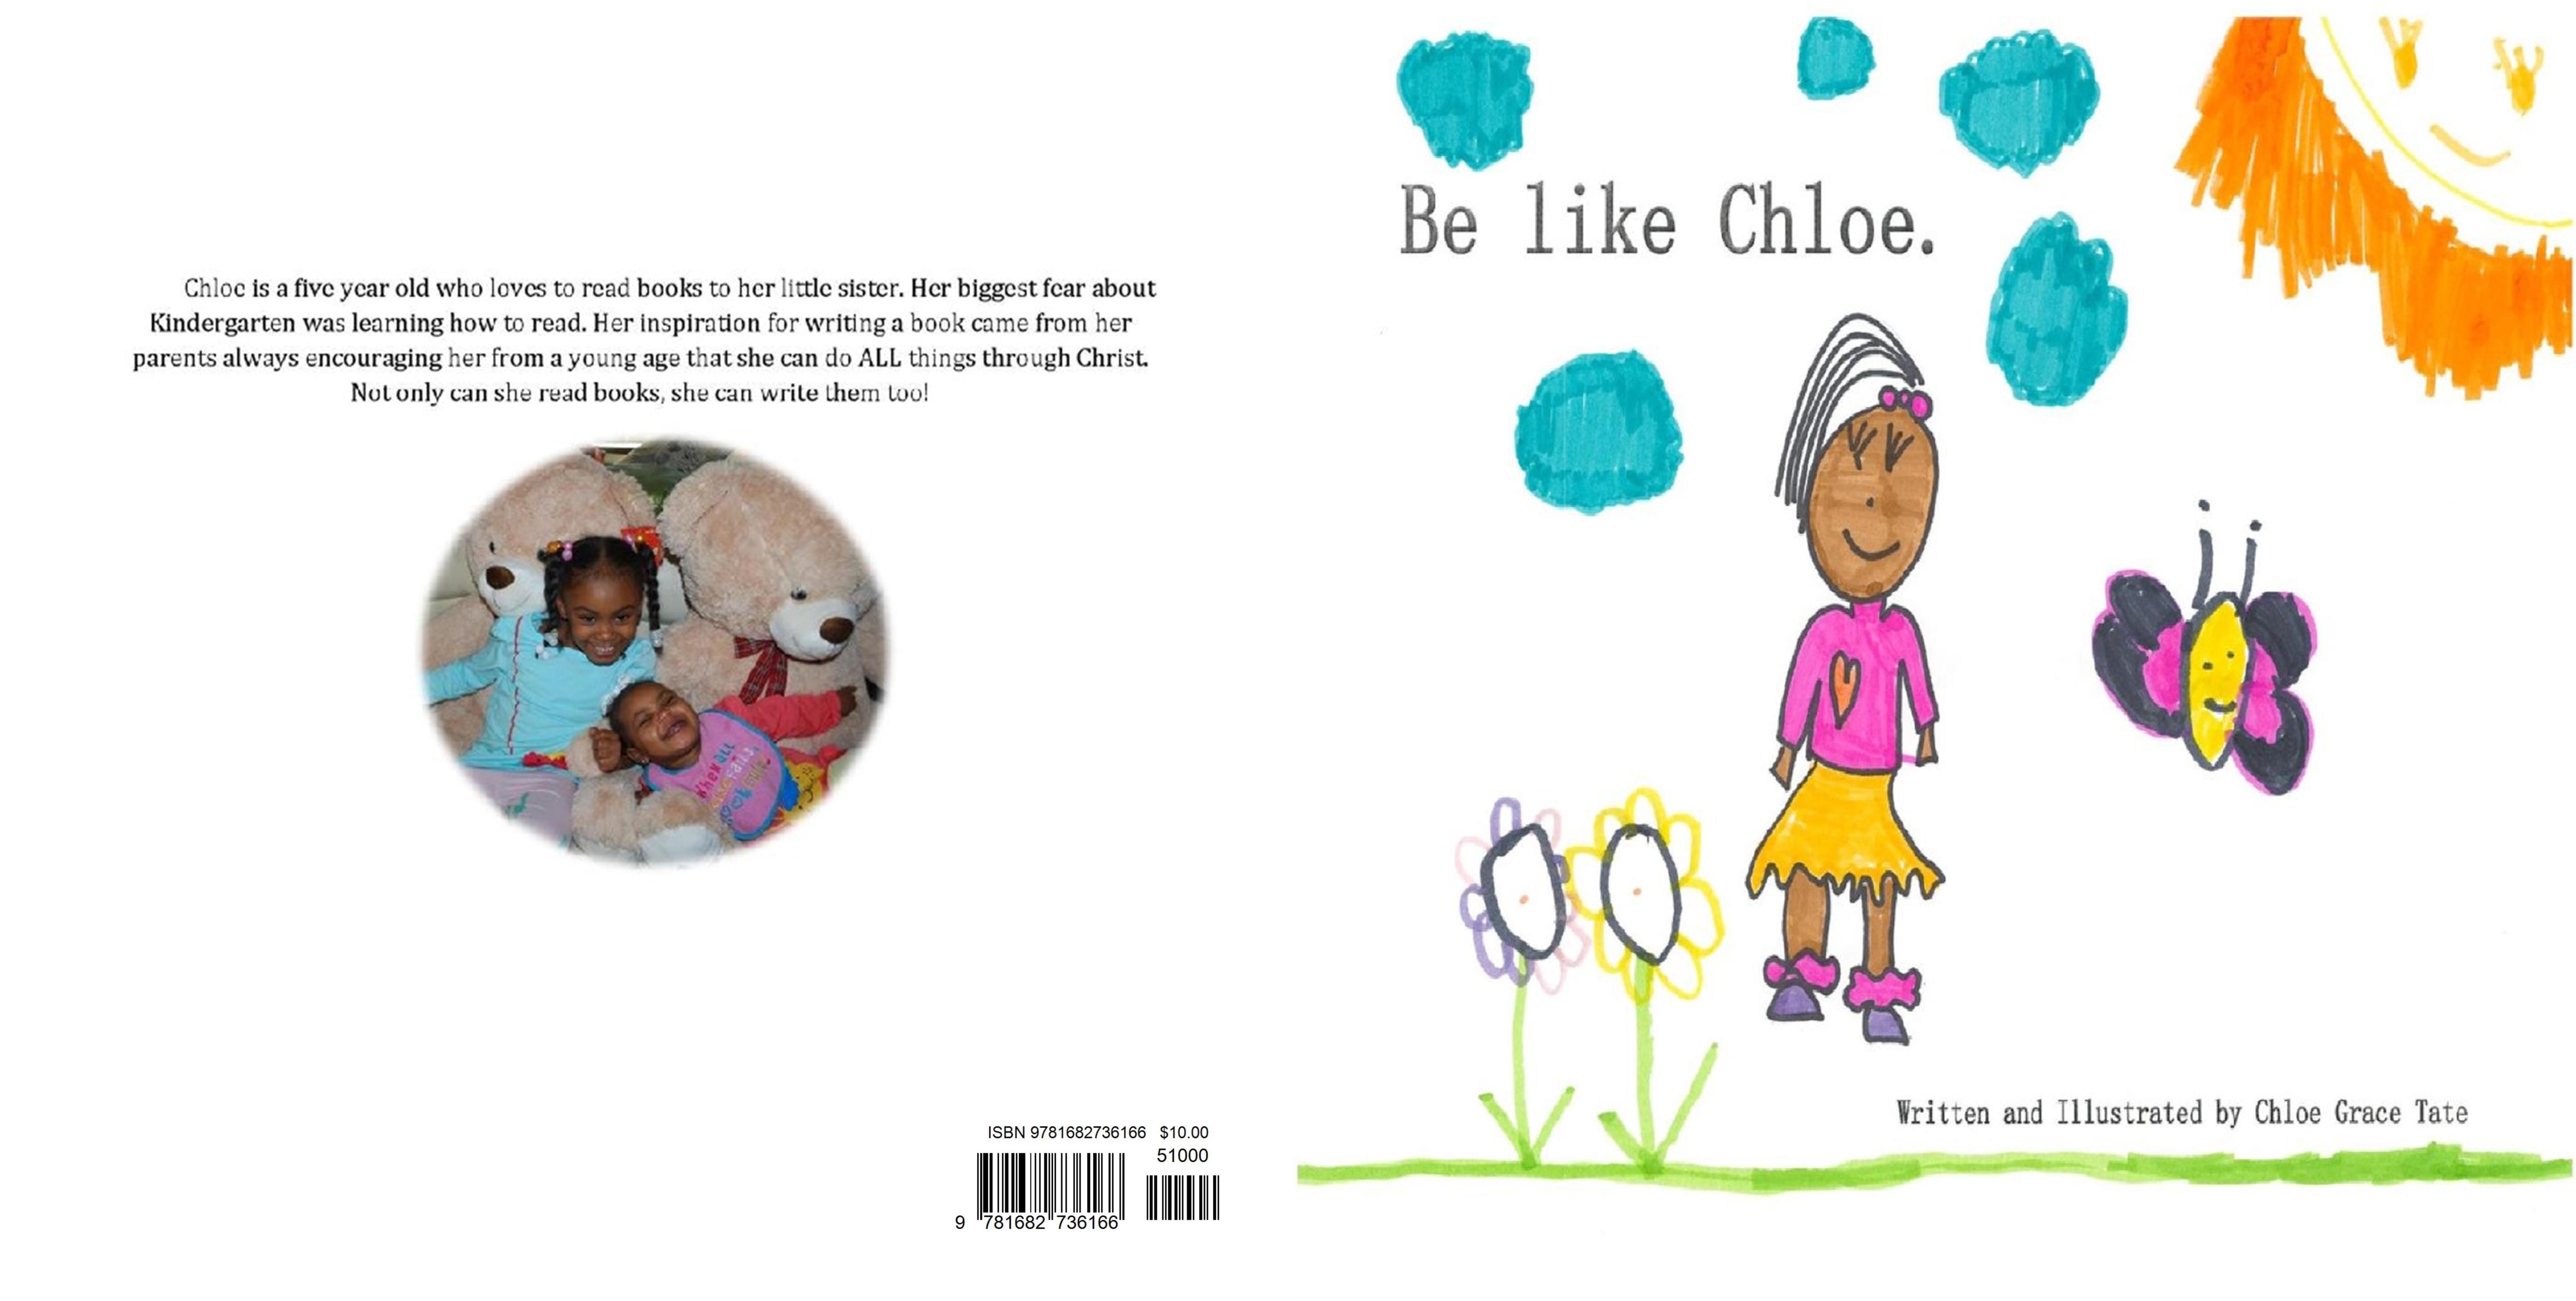 Be like Chloe  cover image